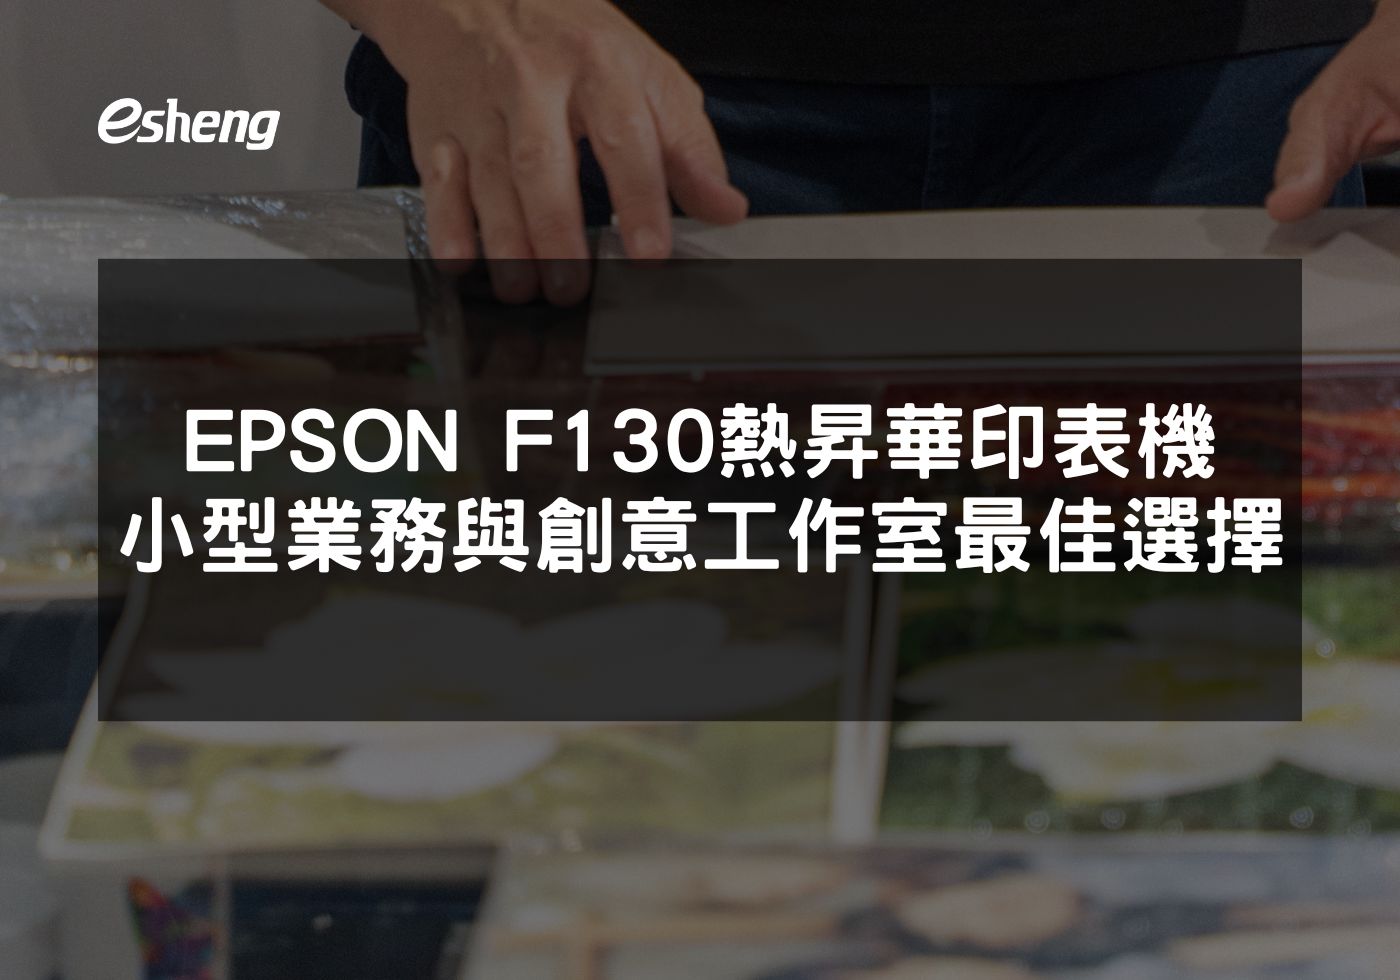 EPSON F130提供多材質高品質圖像印刷解決方案